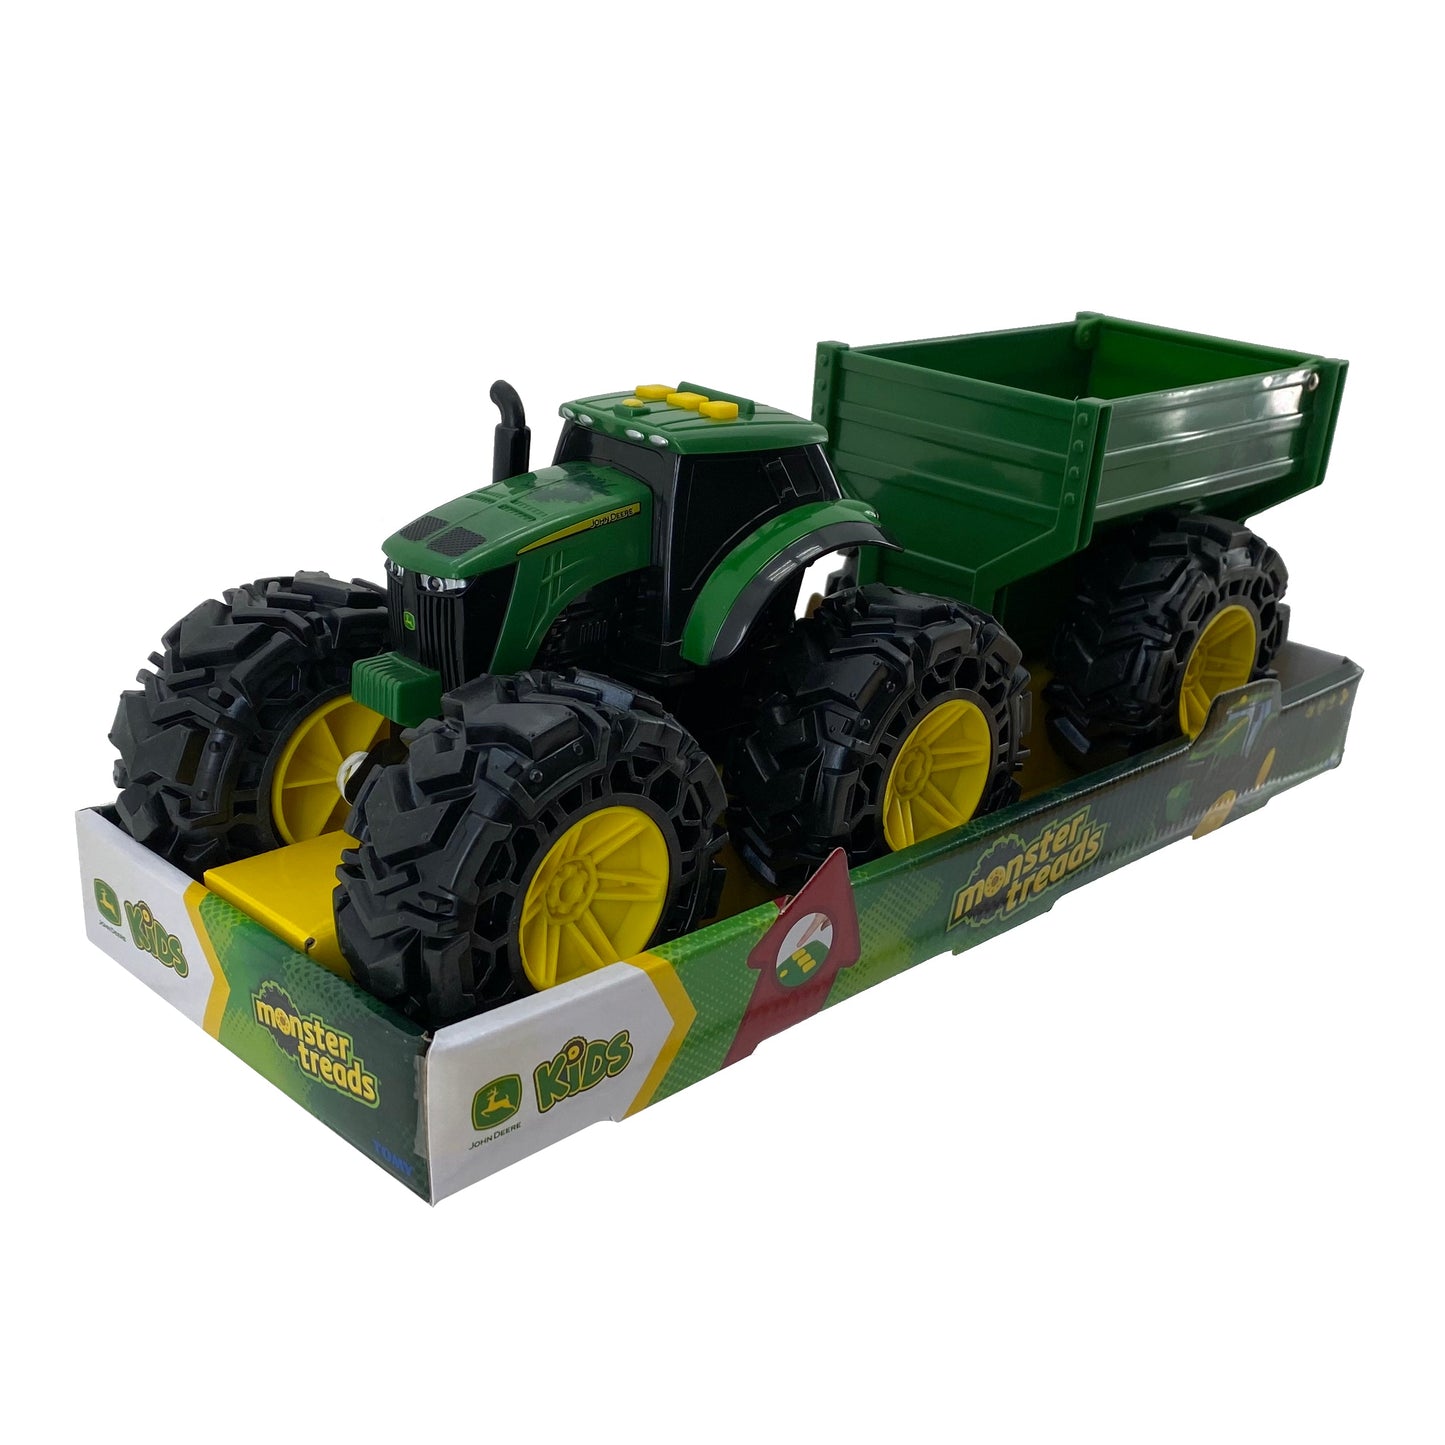 John Deere Monster Treads Tractor with Wagon - LP77352